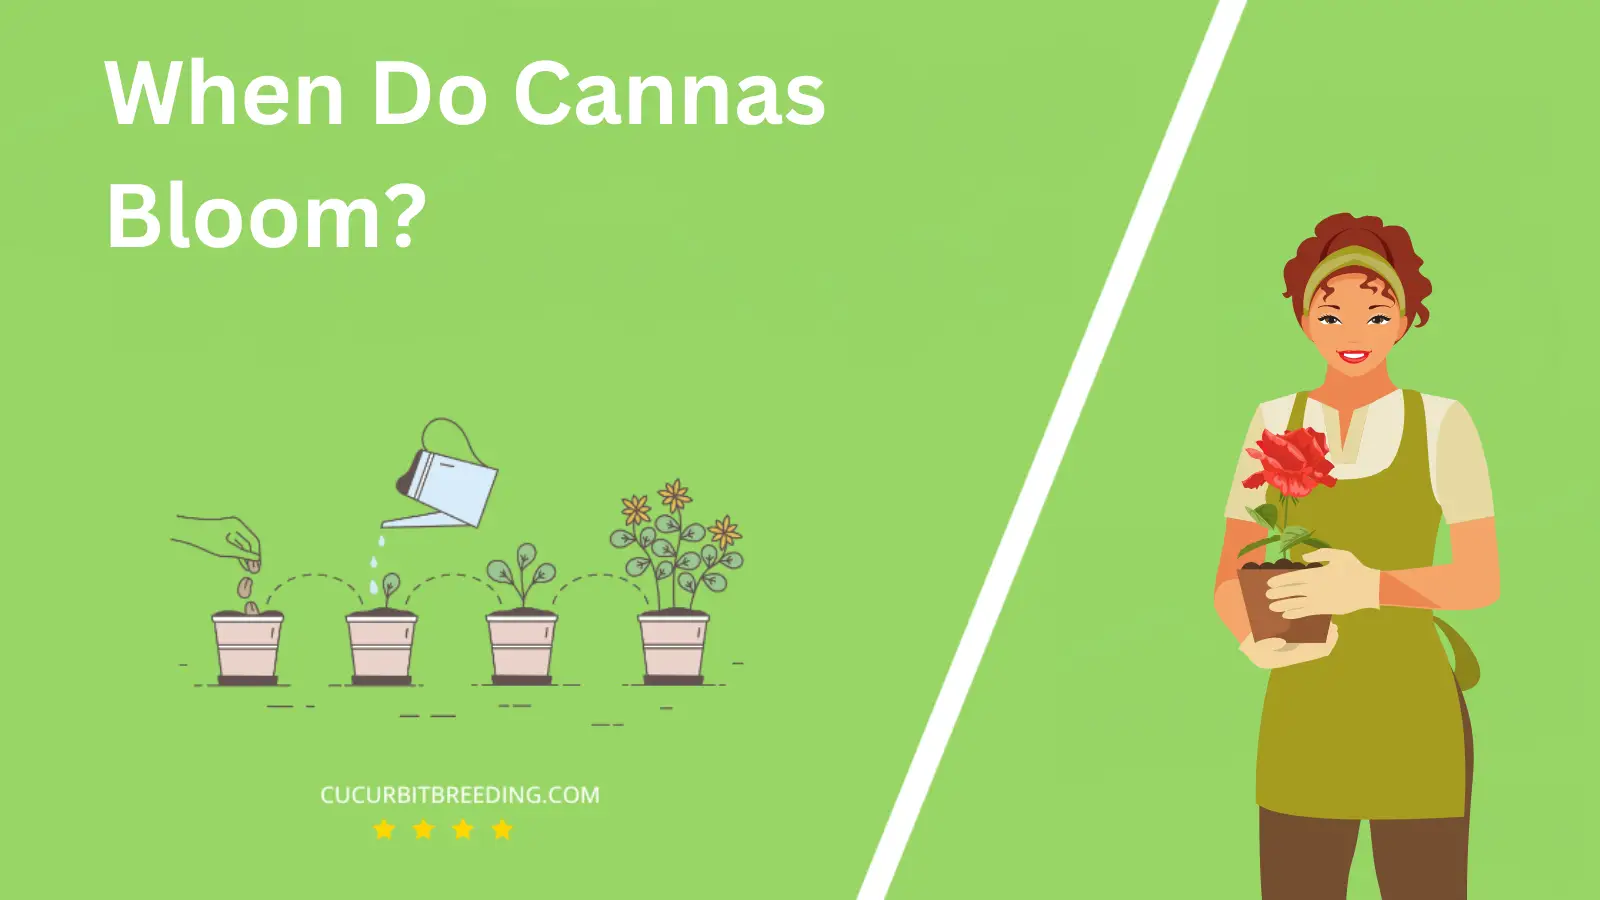 When Do Cannas Bloom?